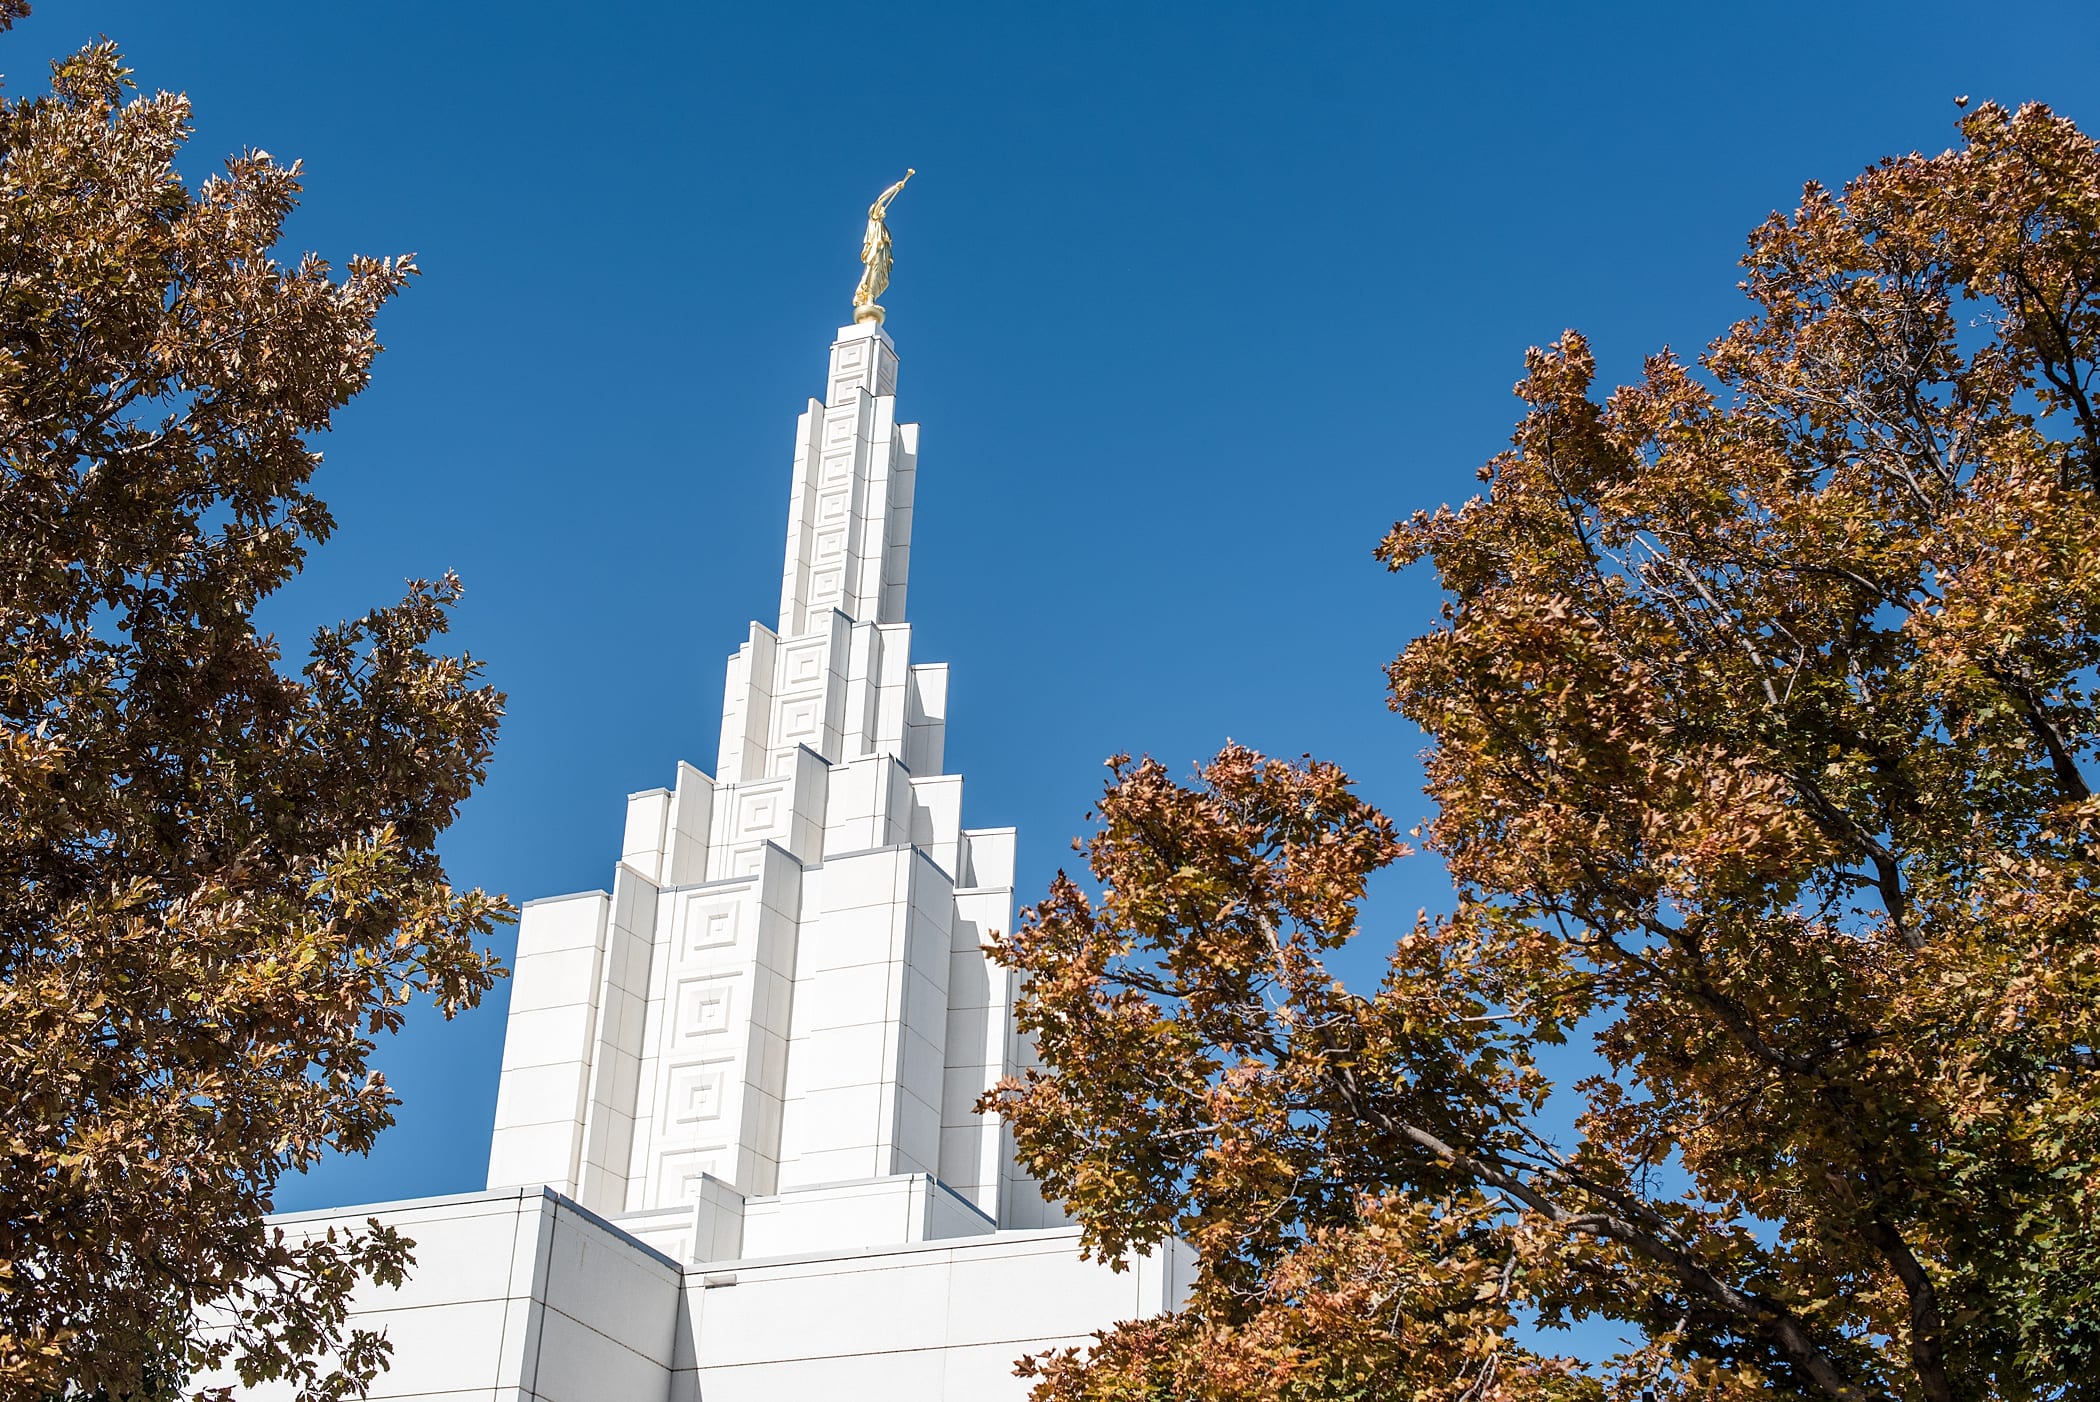 Idaho Falls LDS Temple Fall Wedding | Michelle & Logan